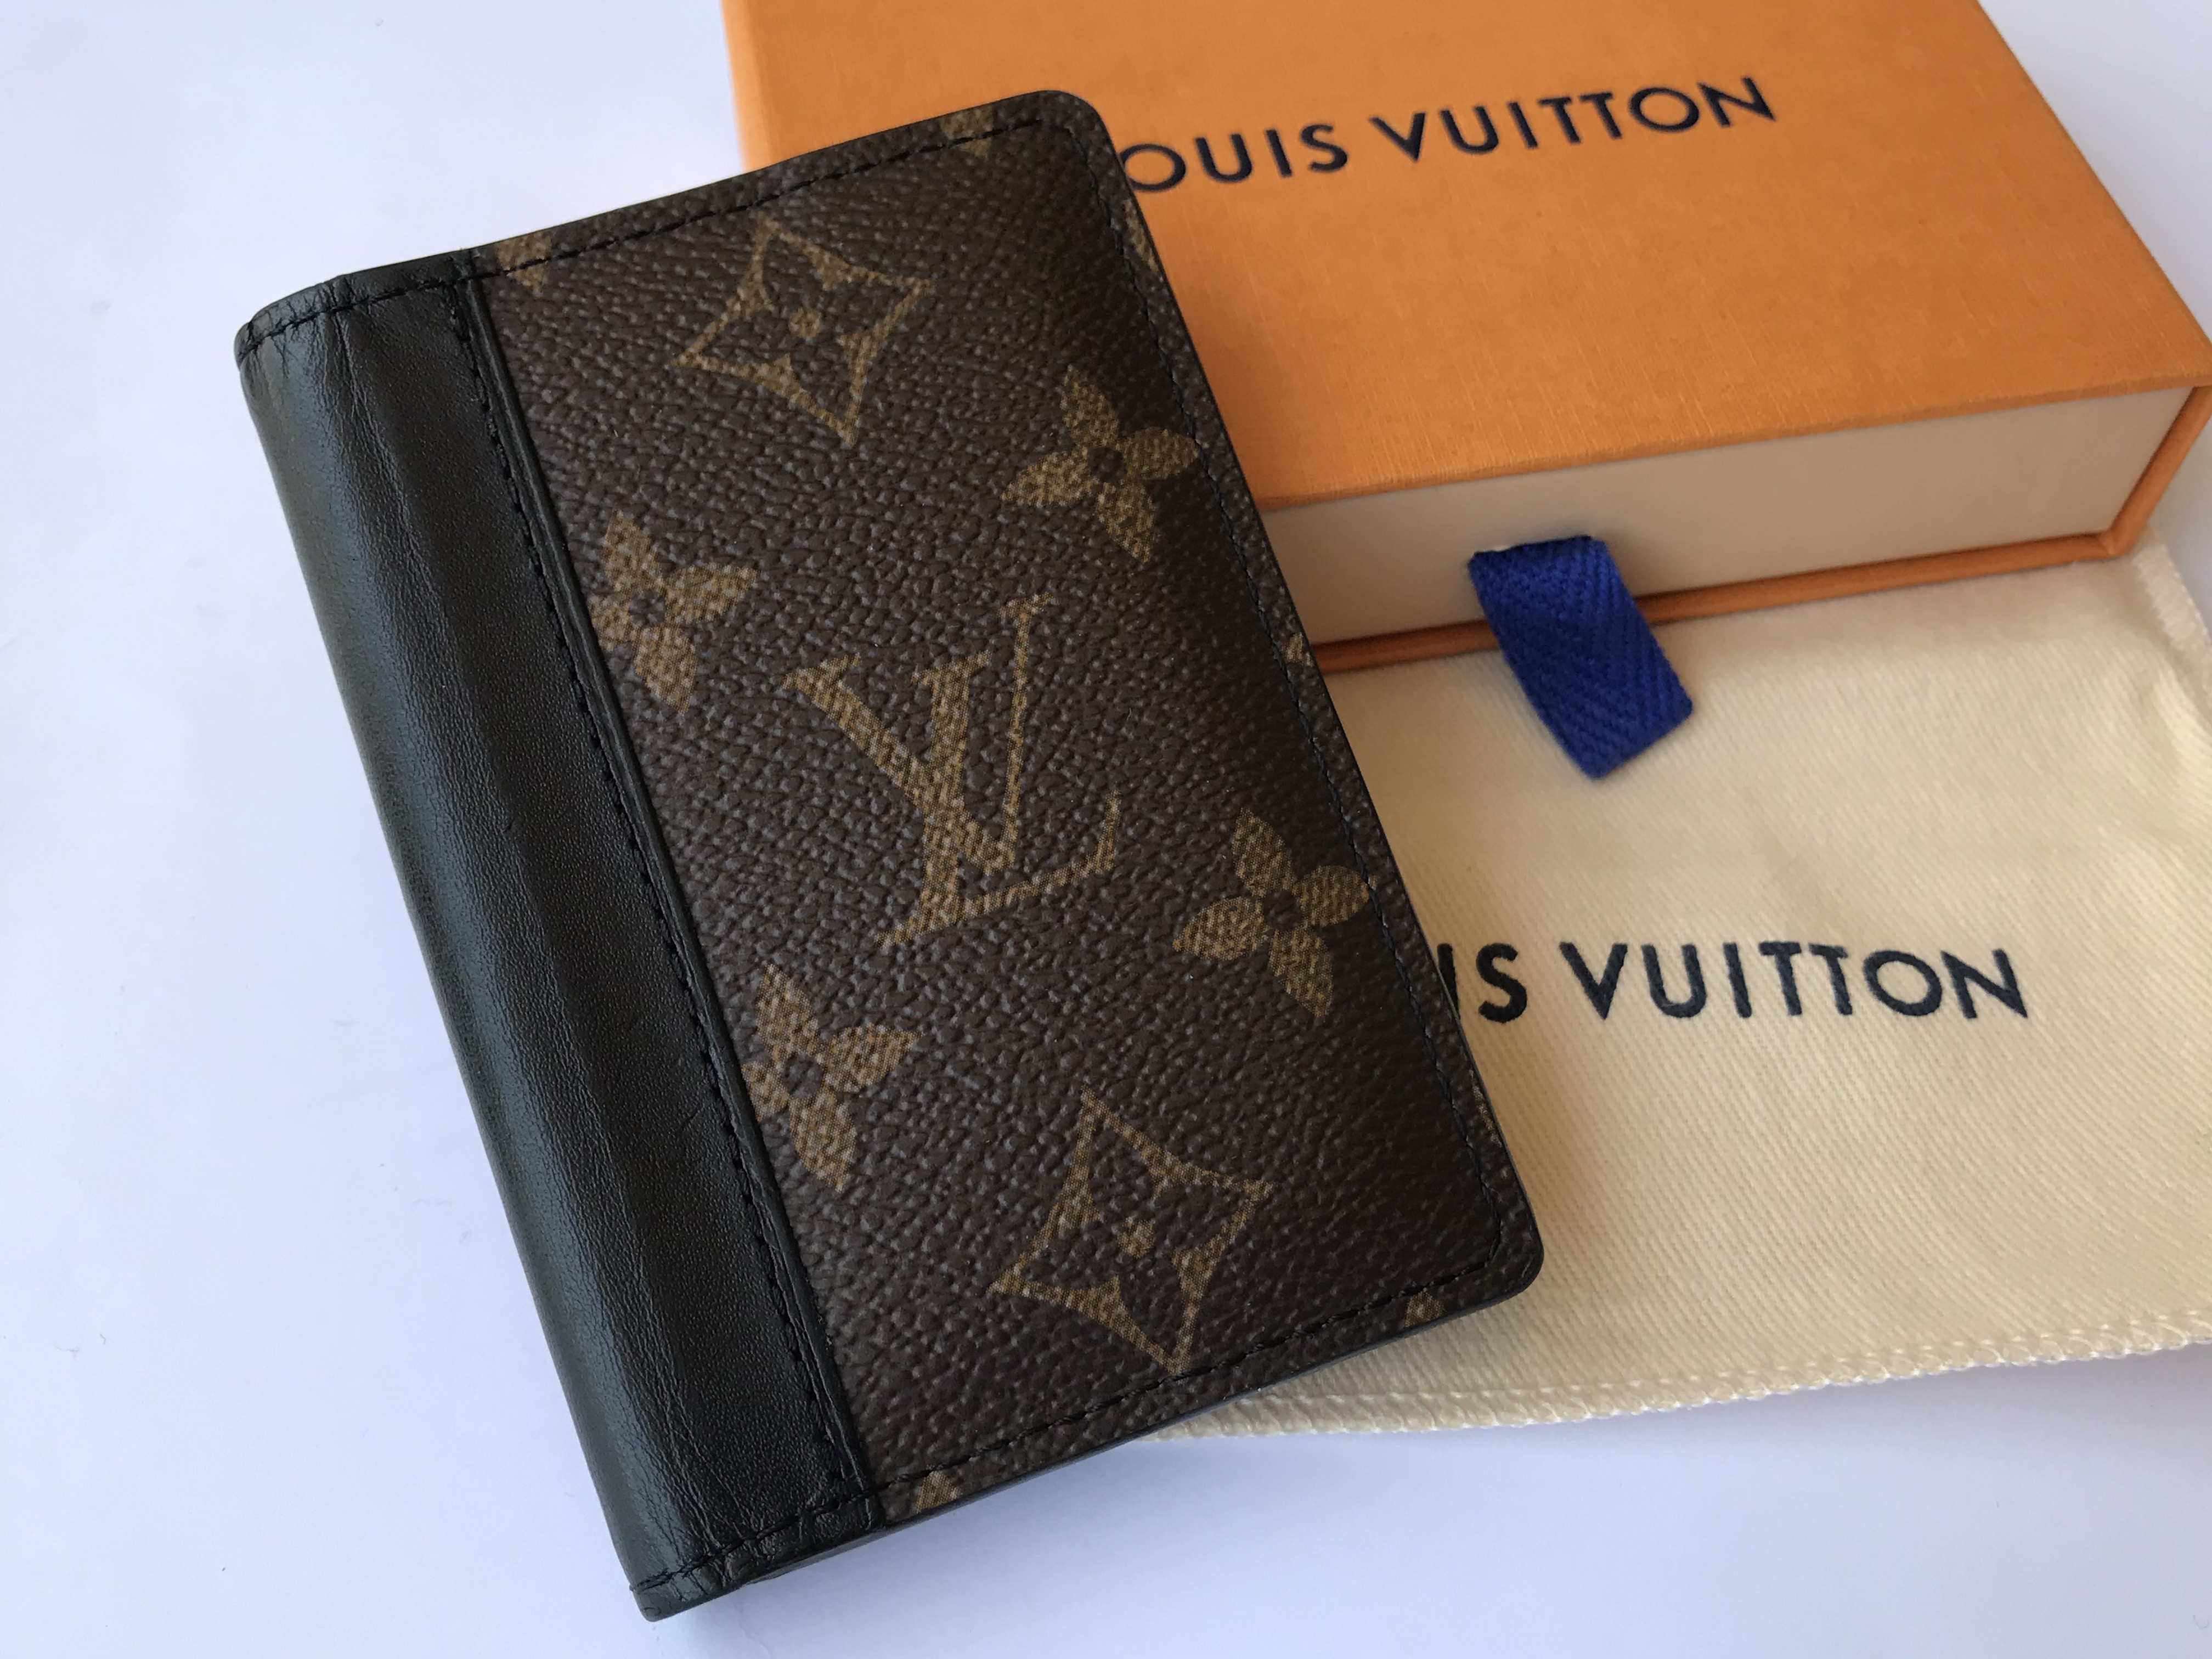 Organizer Louis Vuitton Pochette Accessoires Brown Cloth ref